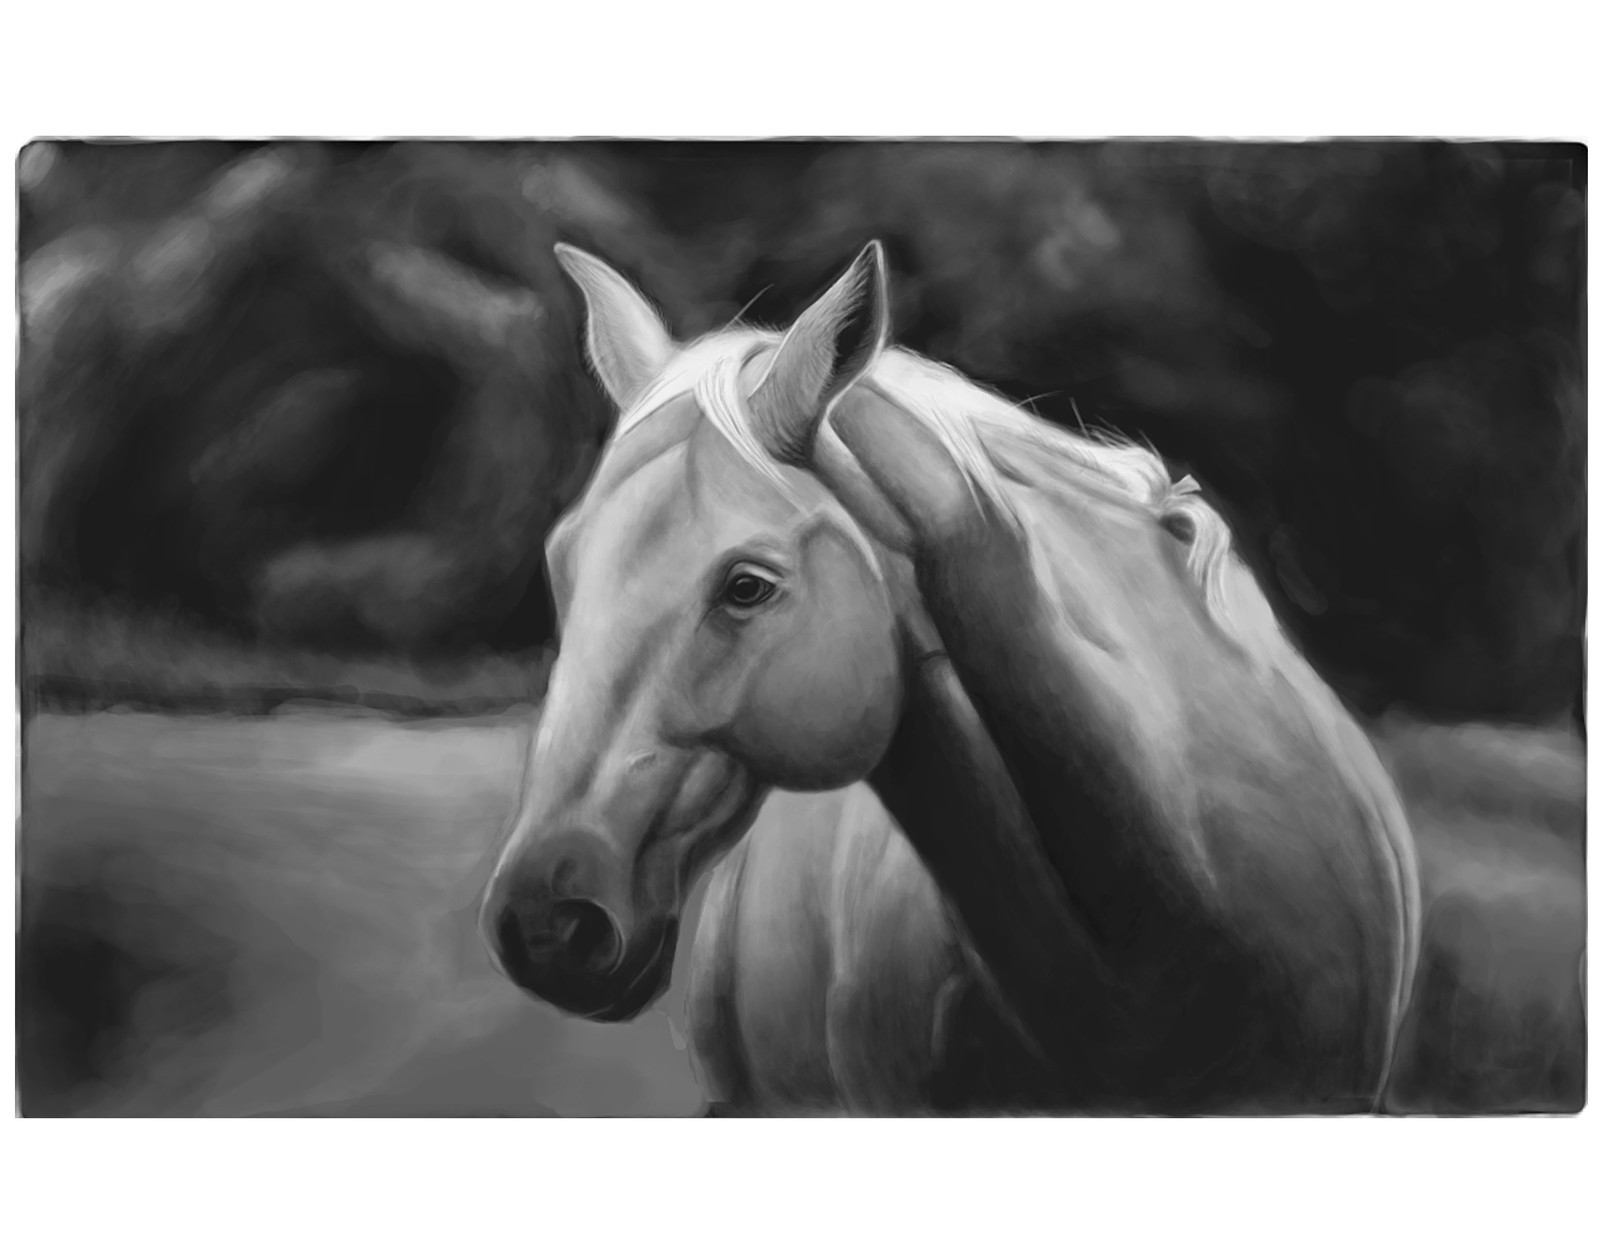 Fer Chx - Horse portrait